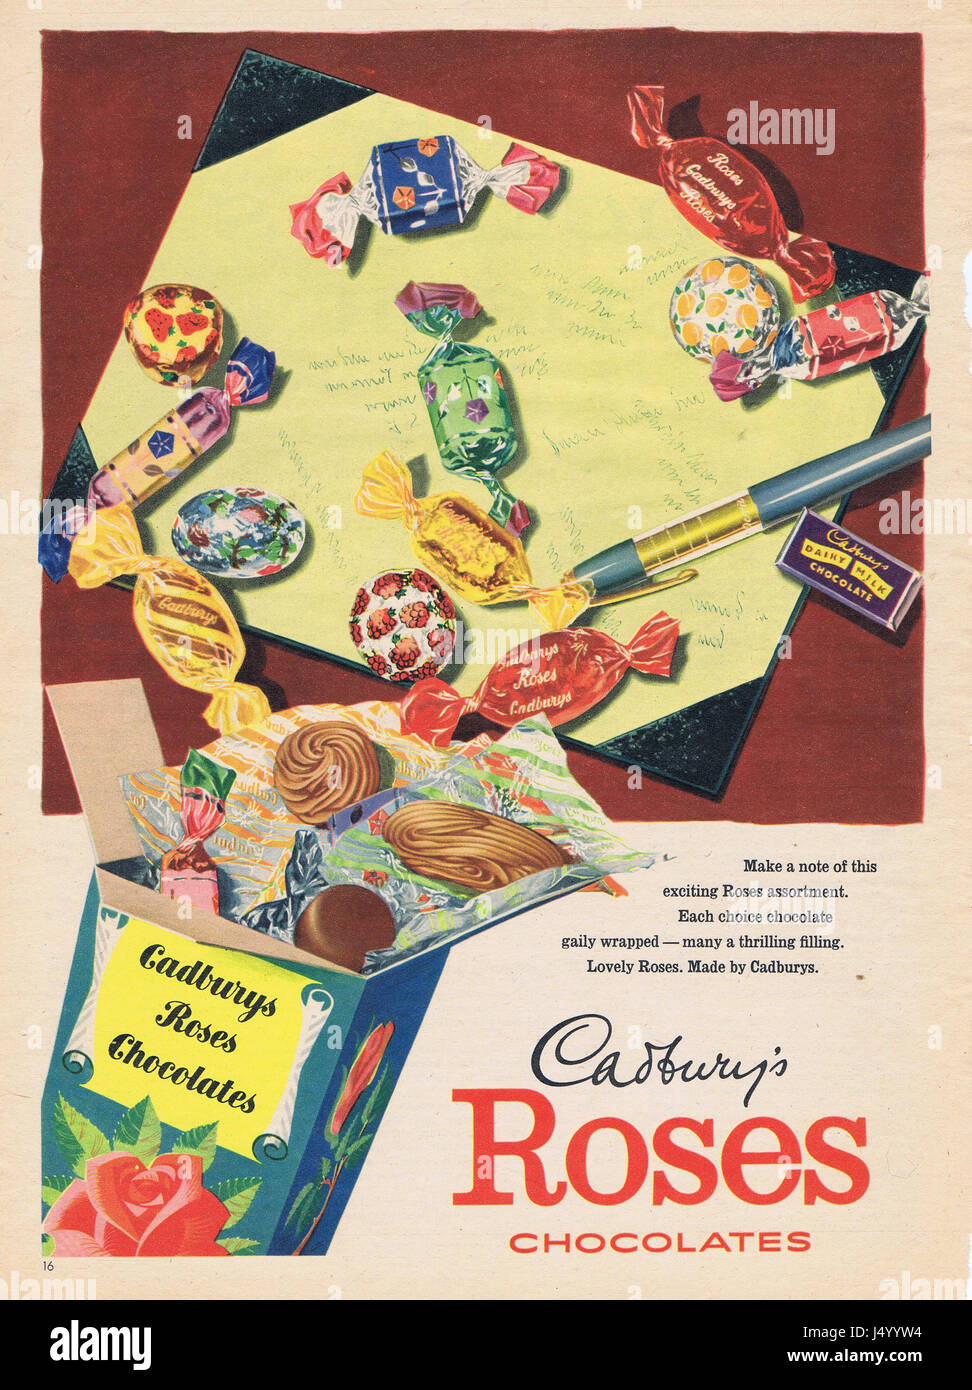 Cadbury's Roses Chocolate Vintage Advert Stock Photo